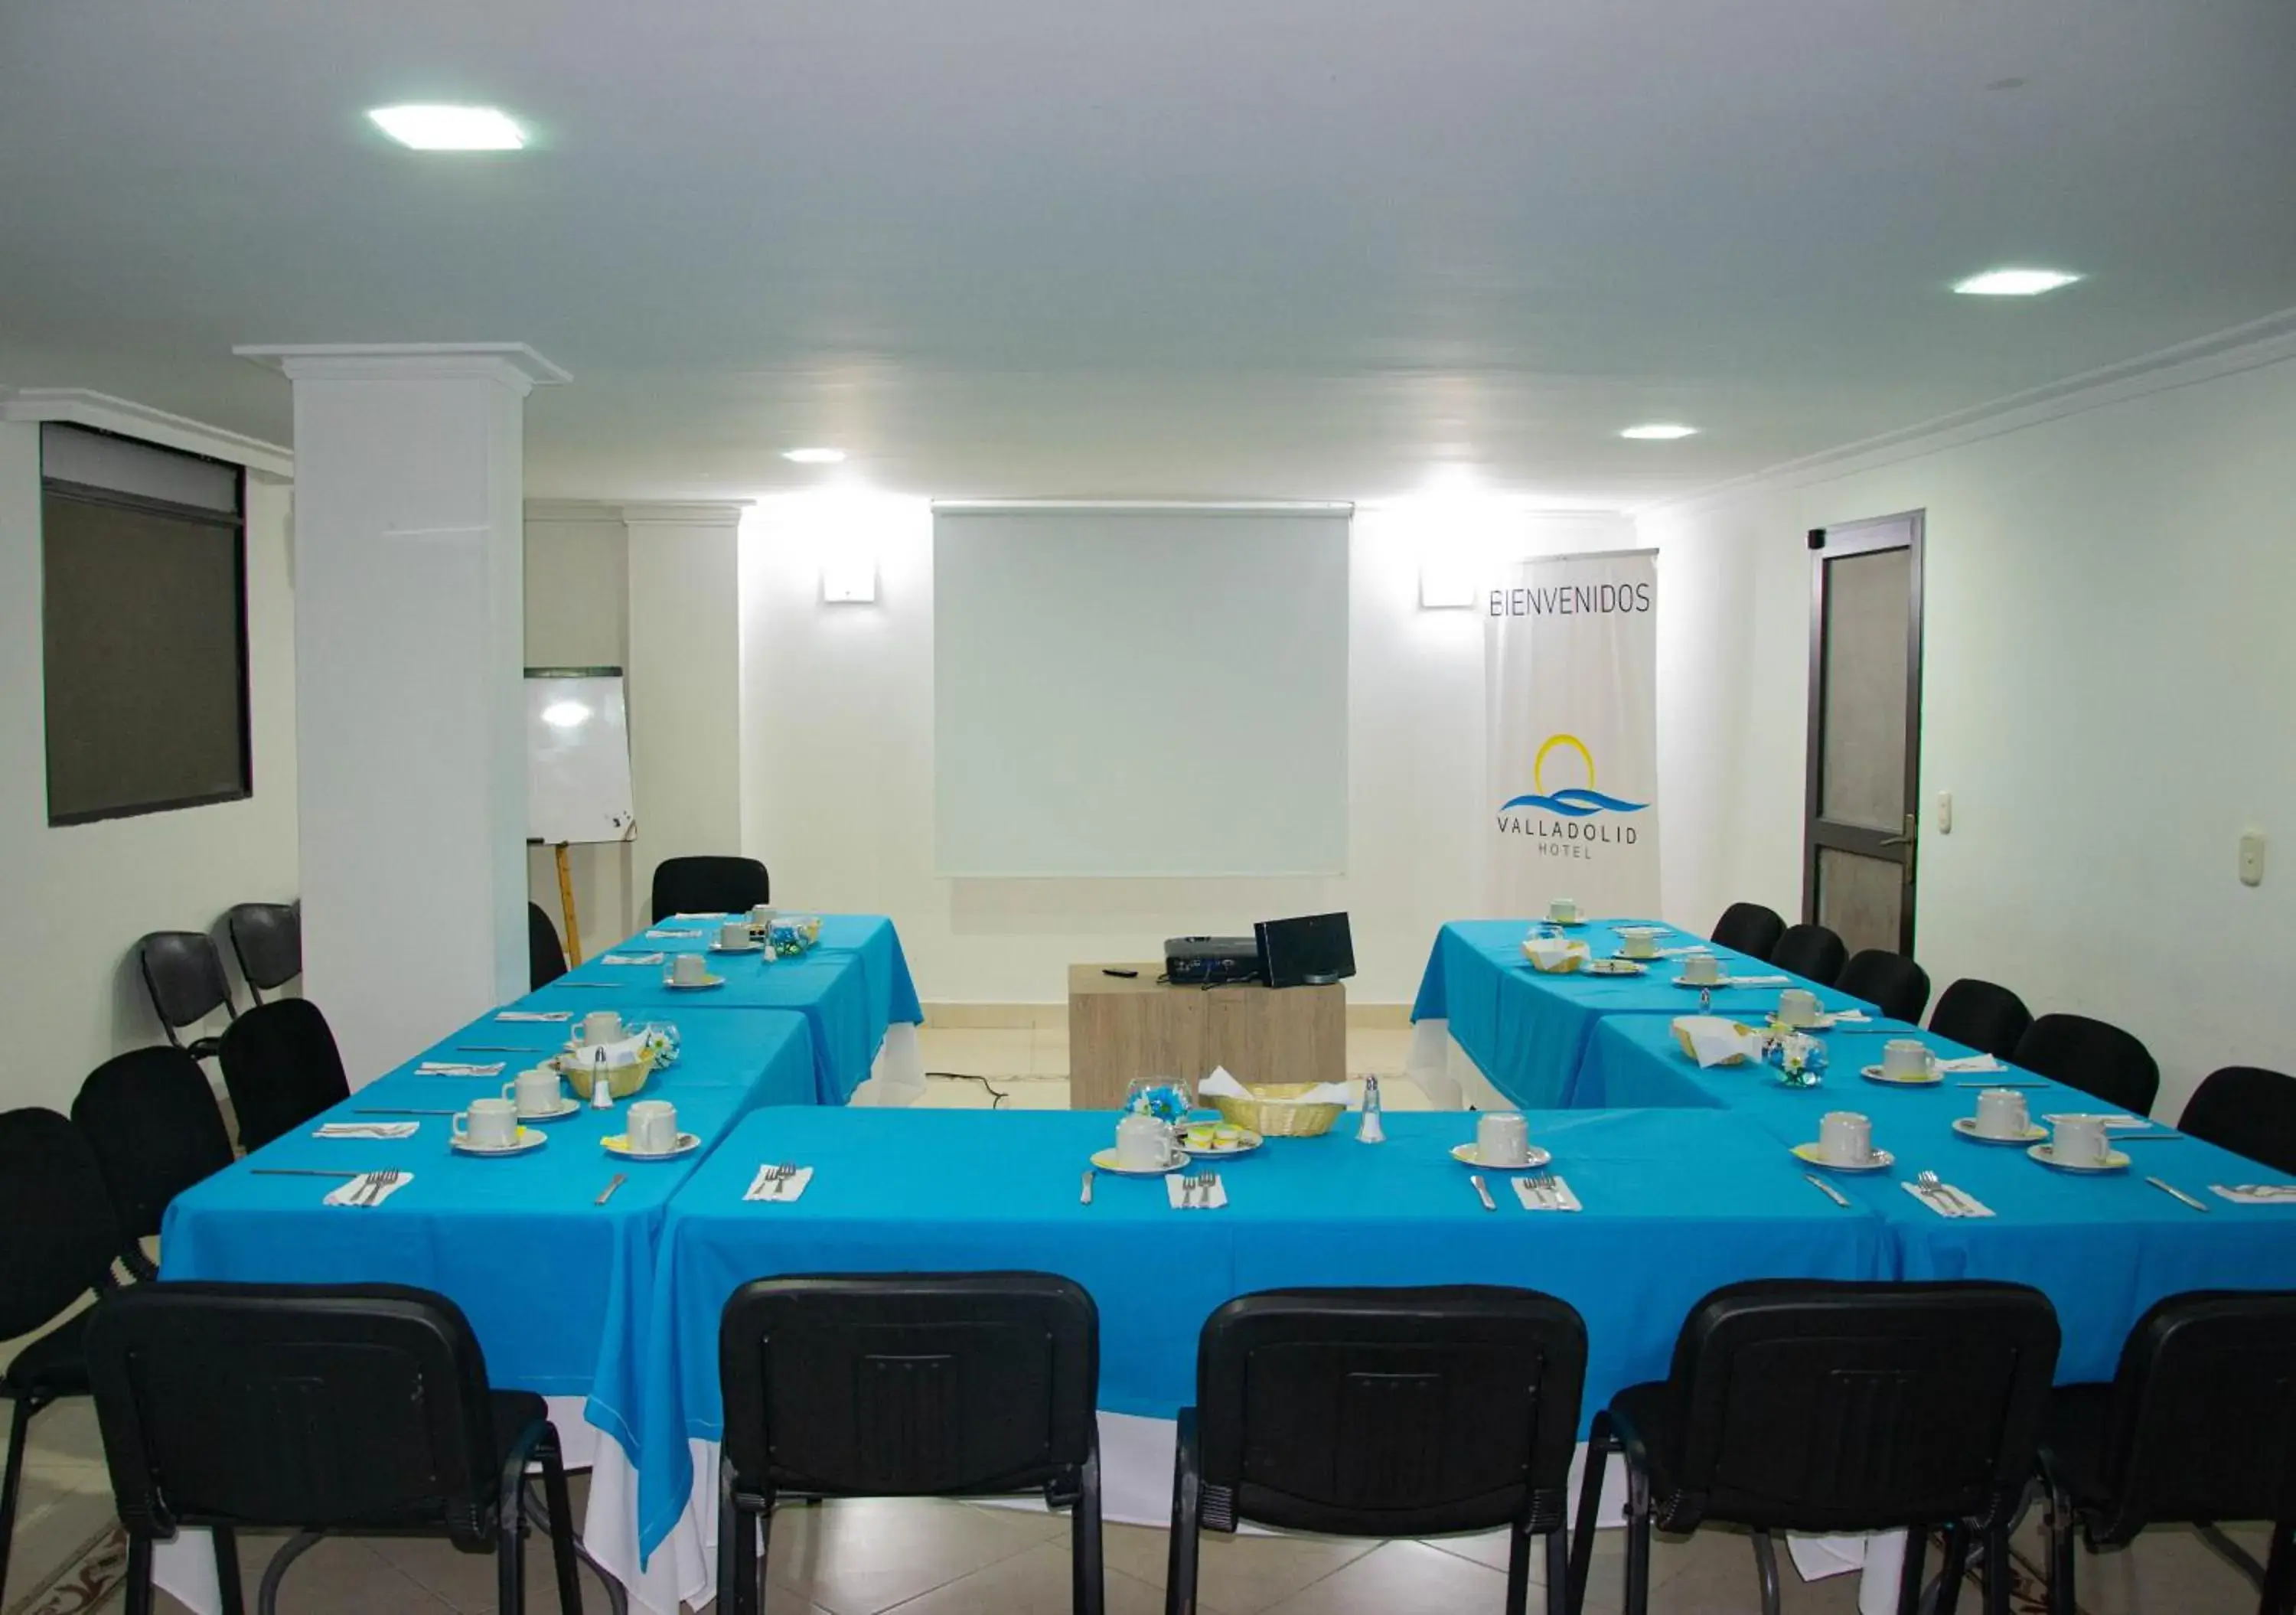 Business facilities in Hotel Valladolid